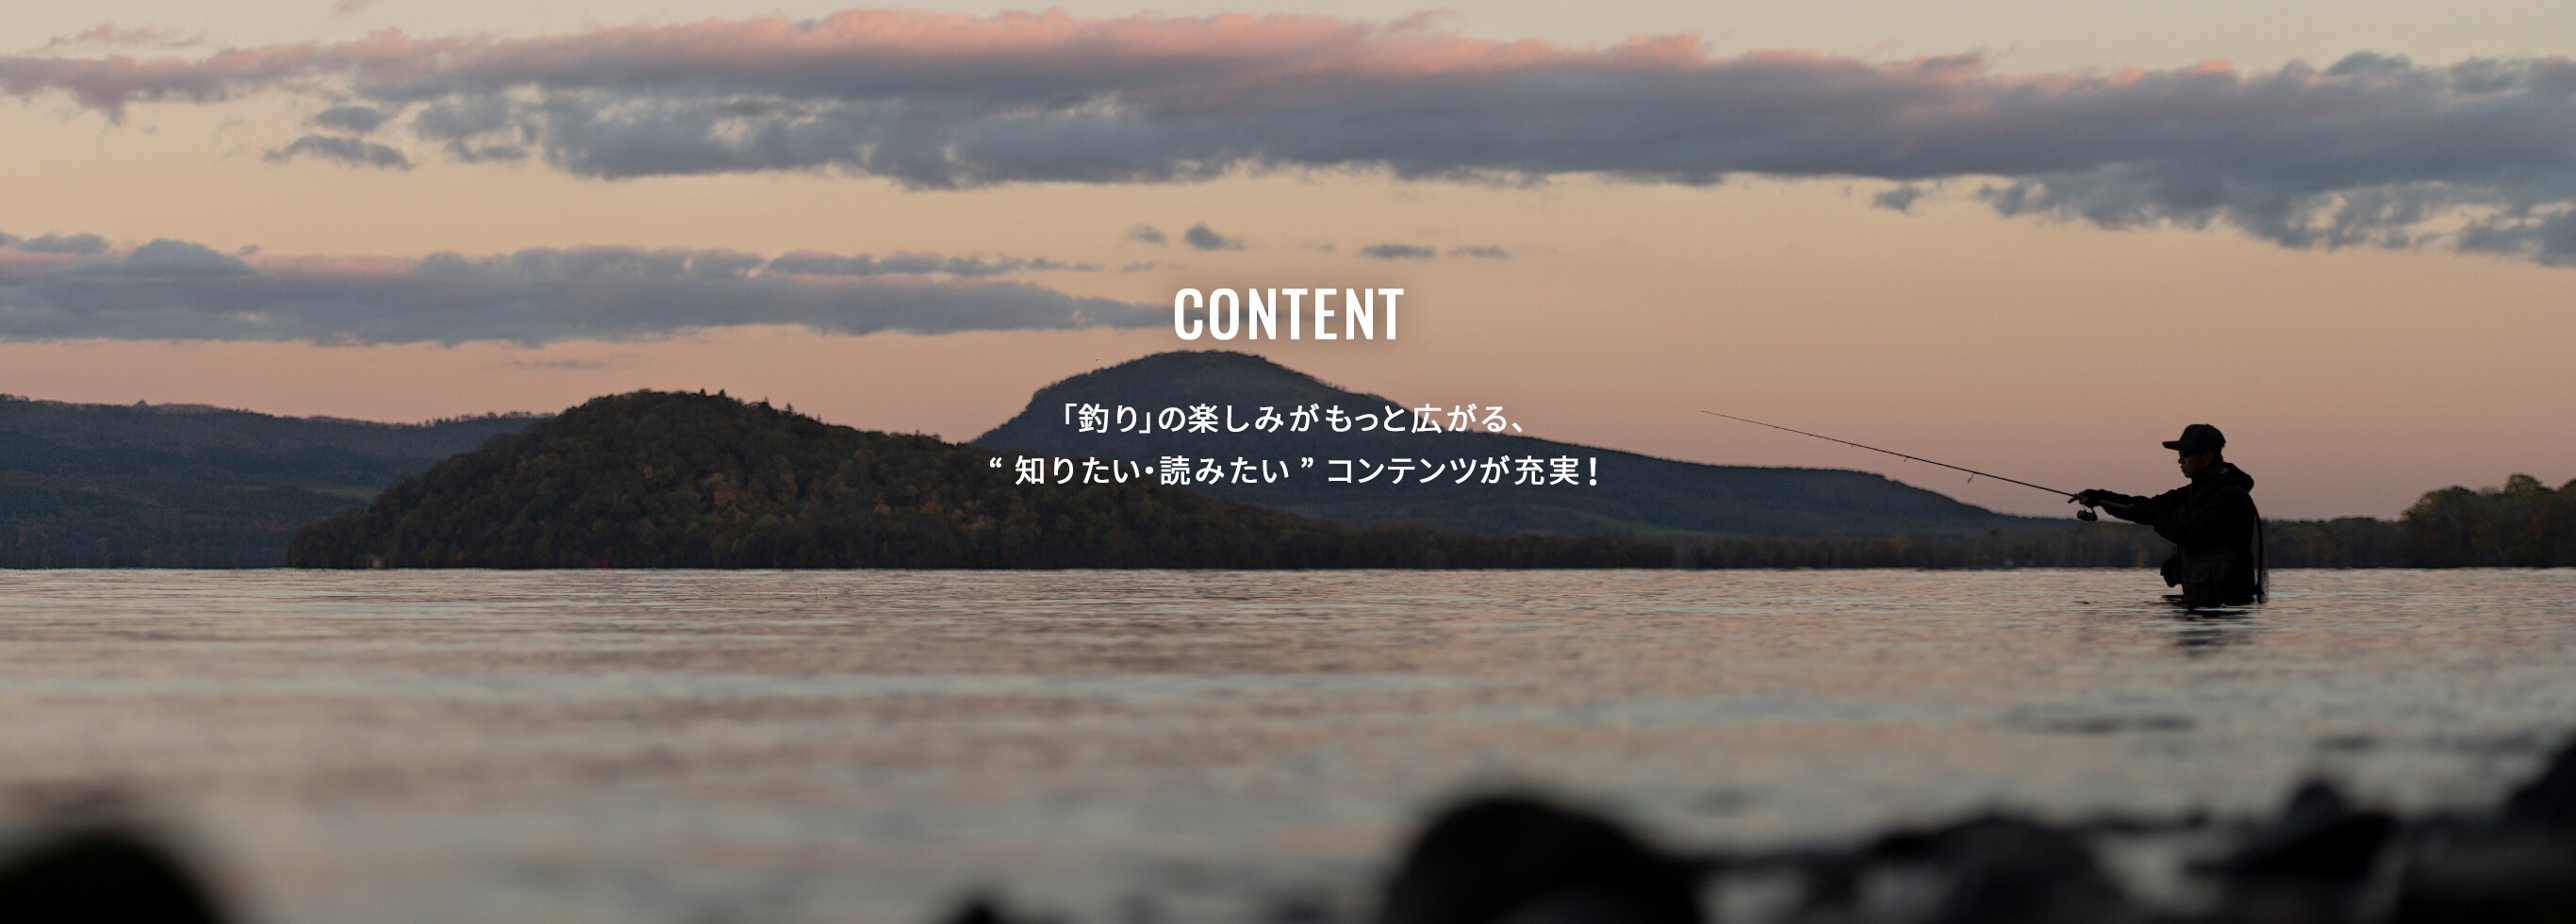 CONTENT | SHIMANO シマノ